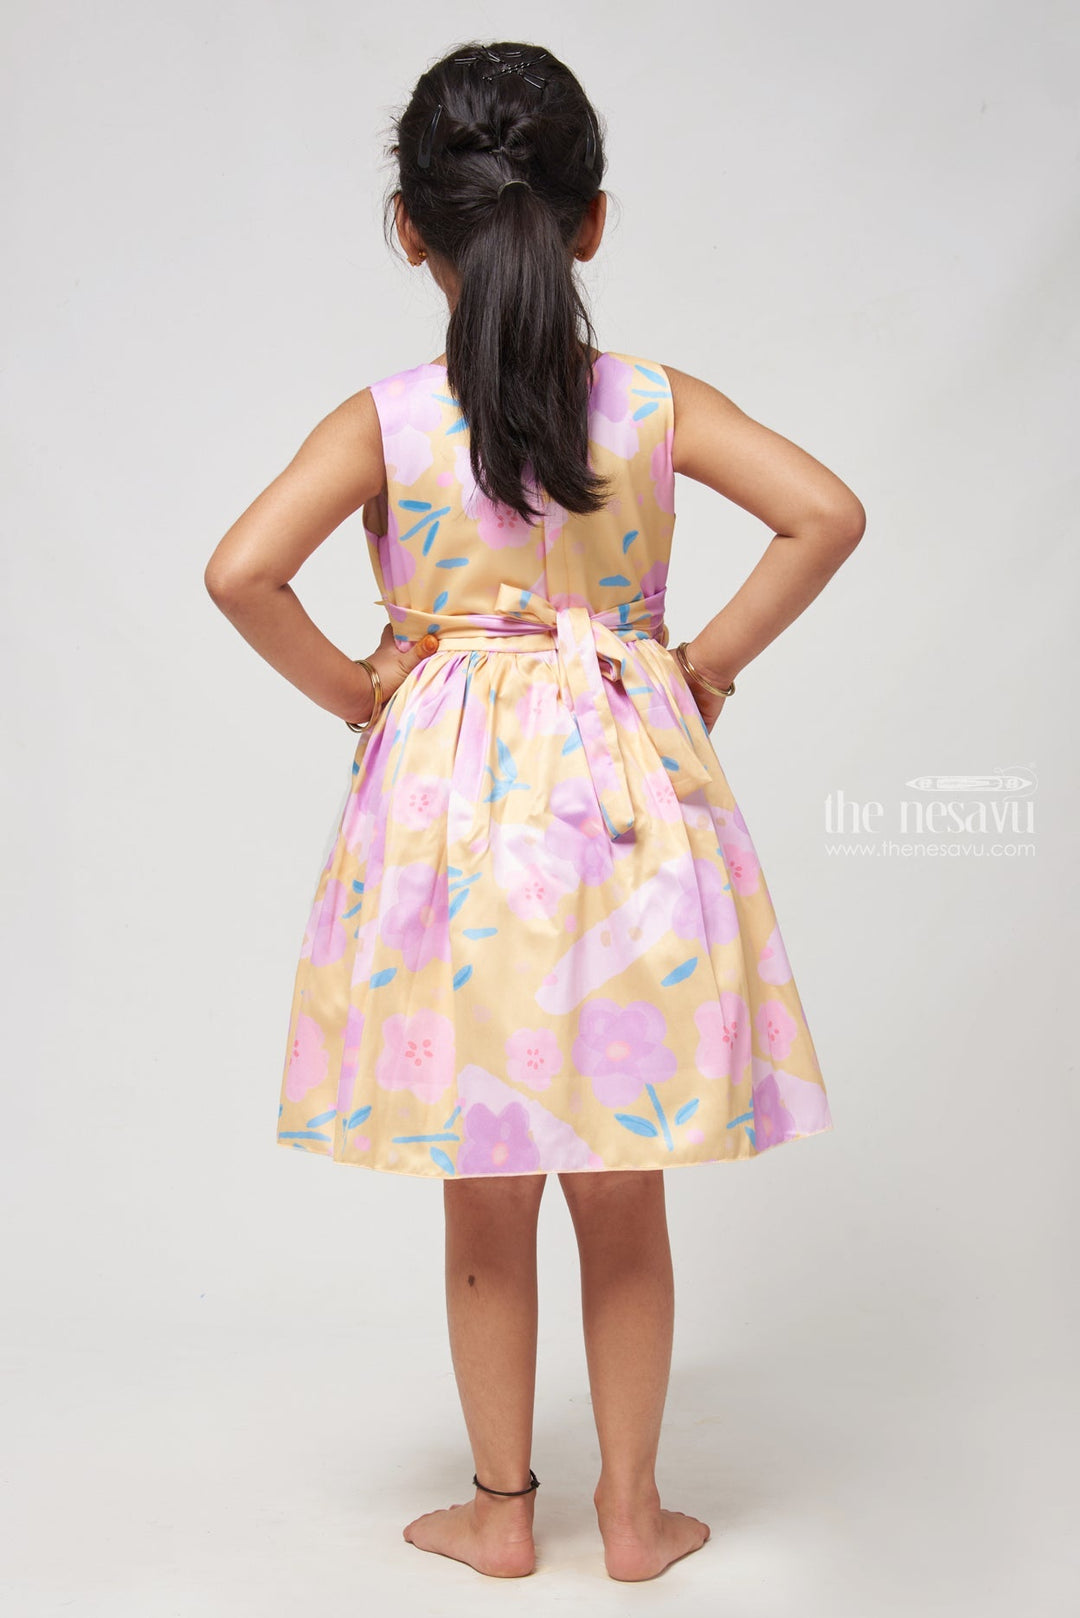 The Nesavu Girls Fancy Frock A-line Silhouette Frock Kids Designer Wear with Tulle Underskirt Nesavu Pageant Ready Knee-length Dress For Kids - Perfect For Photoshoots | The Nesavu